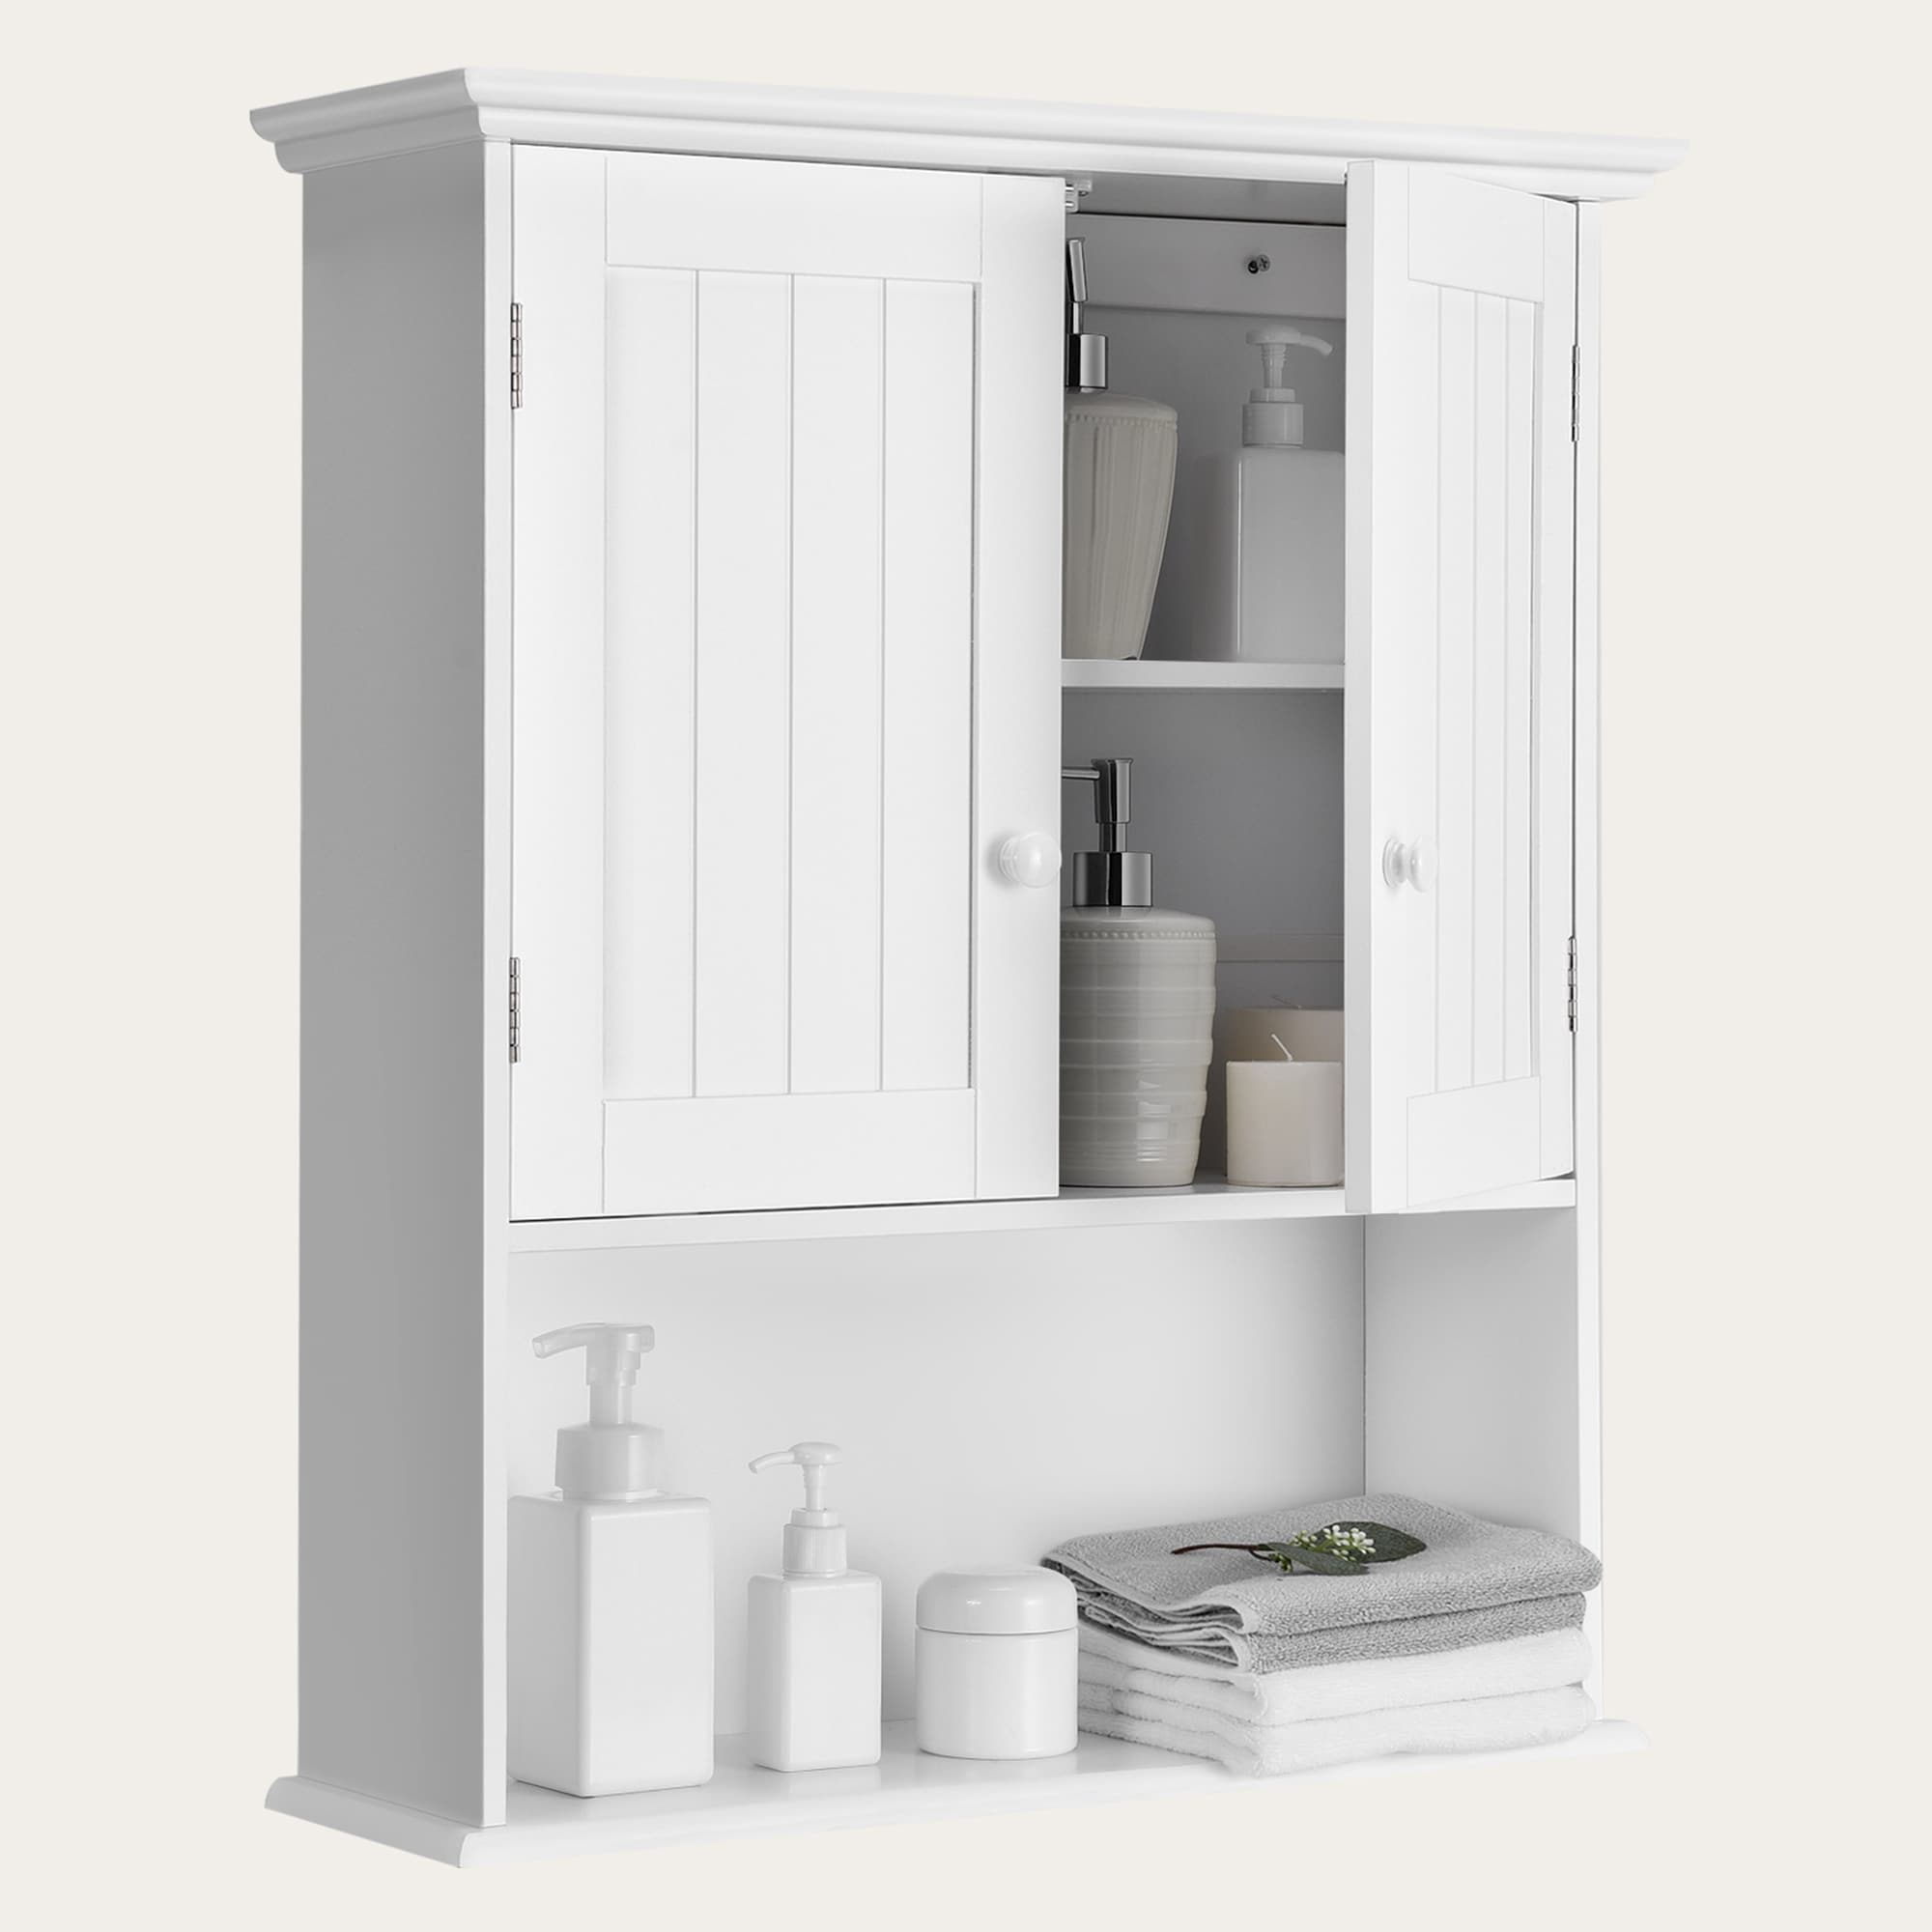 https://ak1.ostkcdn.com/images/products/is/images/direct/bee8b395c817d8f9f2aba177b07223b406fb9c02/Costway-Wall-Mount-Bathroom-Cabinet-Storage-Organizer-Medicine-Cabinet.jpg